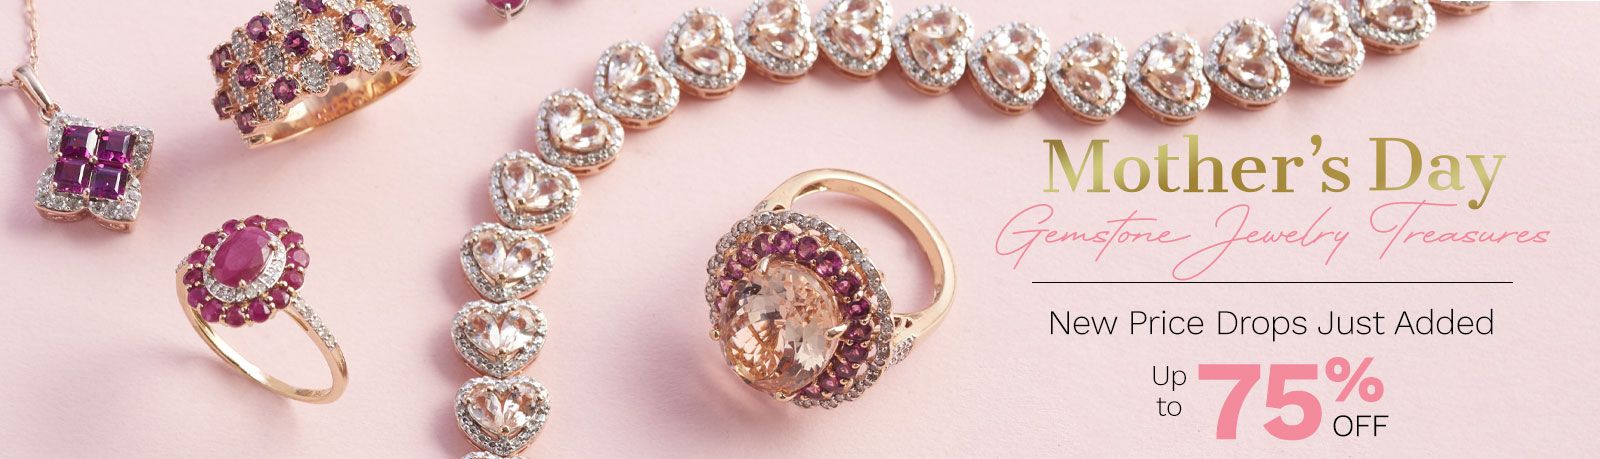 Mothers Day Gemstone Jewelry Flash Sale 205-831, 205-828, 204-922, 204-923, 205-017, 205-005